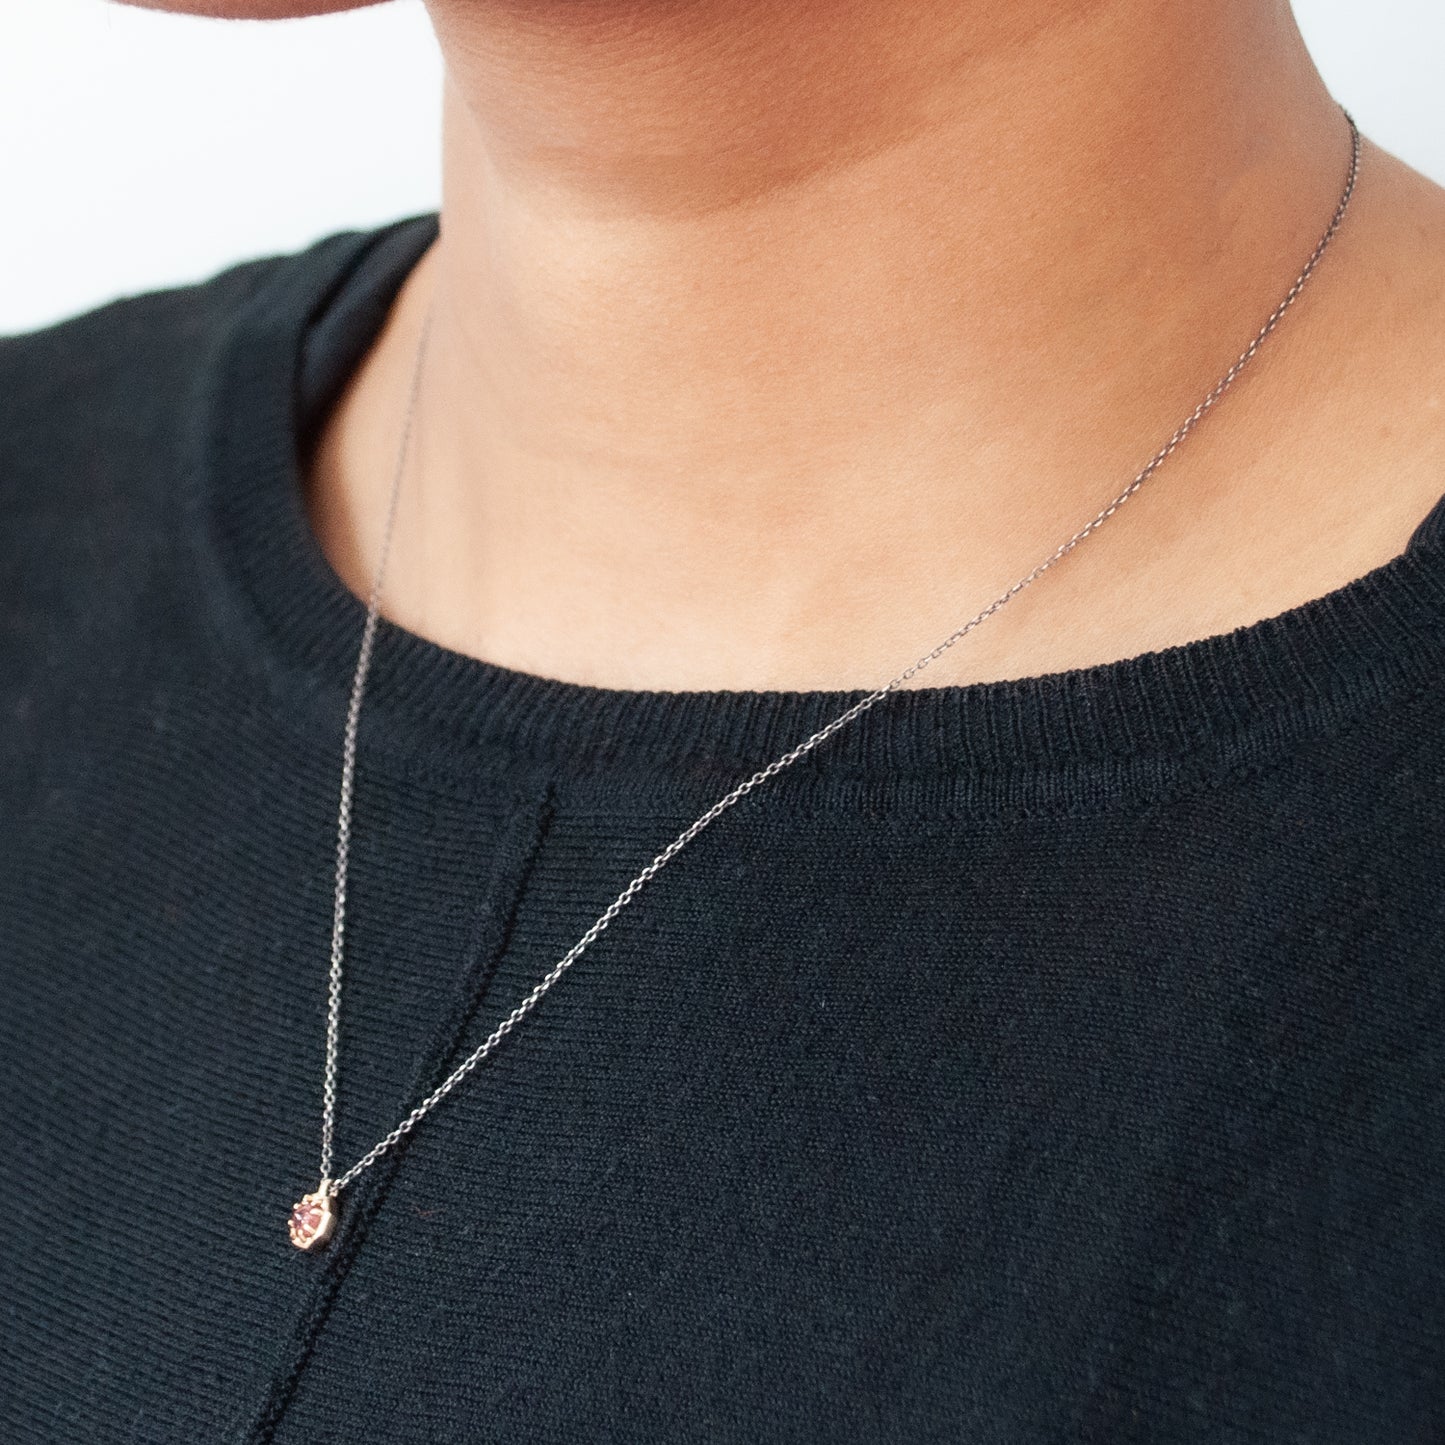 Small Garnet Octagon Necklace